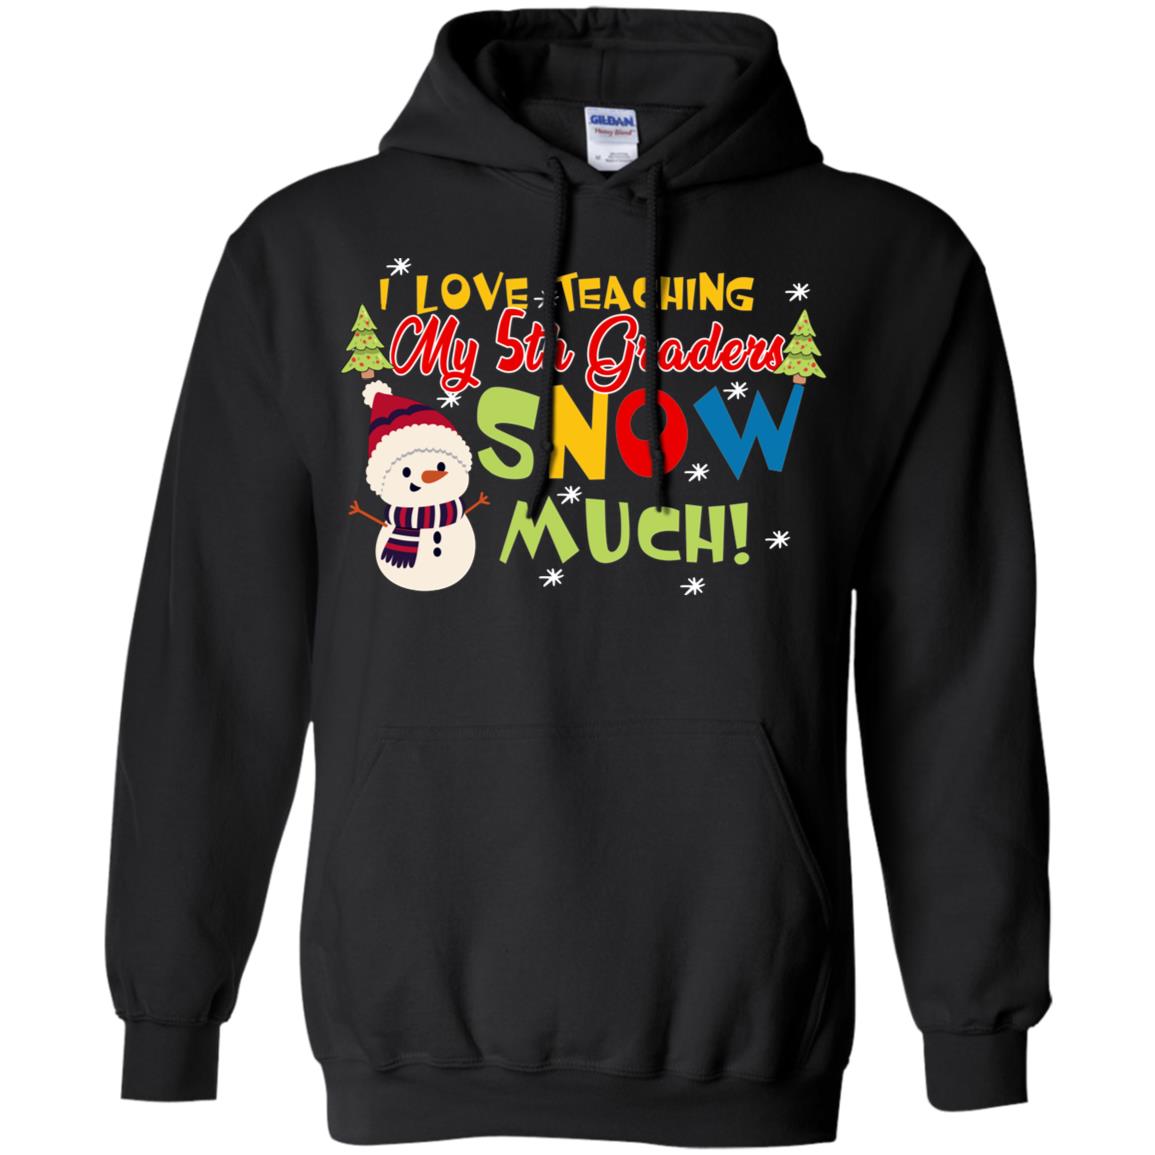 I Love Teaching My 5th Graders Snow Much X-mas Gift Shirt For TeachersG185 Gildan Pullover Hoodie 8 oz.